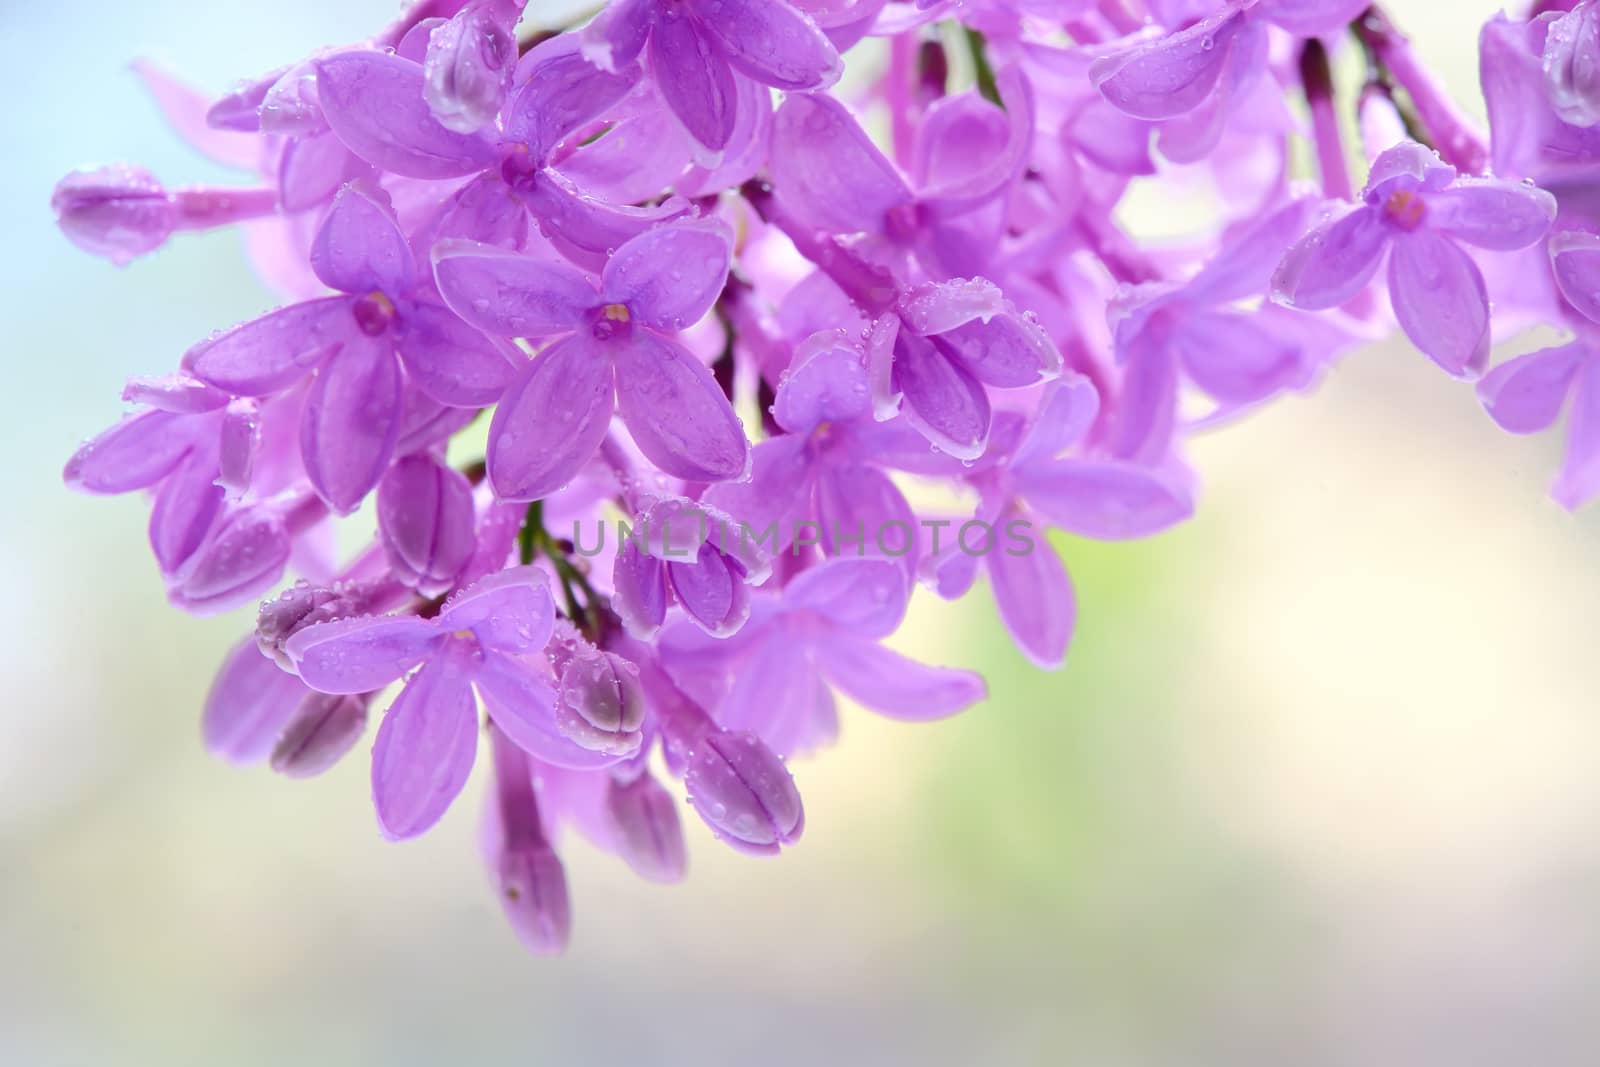 Blooming lilac flowers by jordachelr